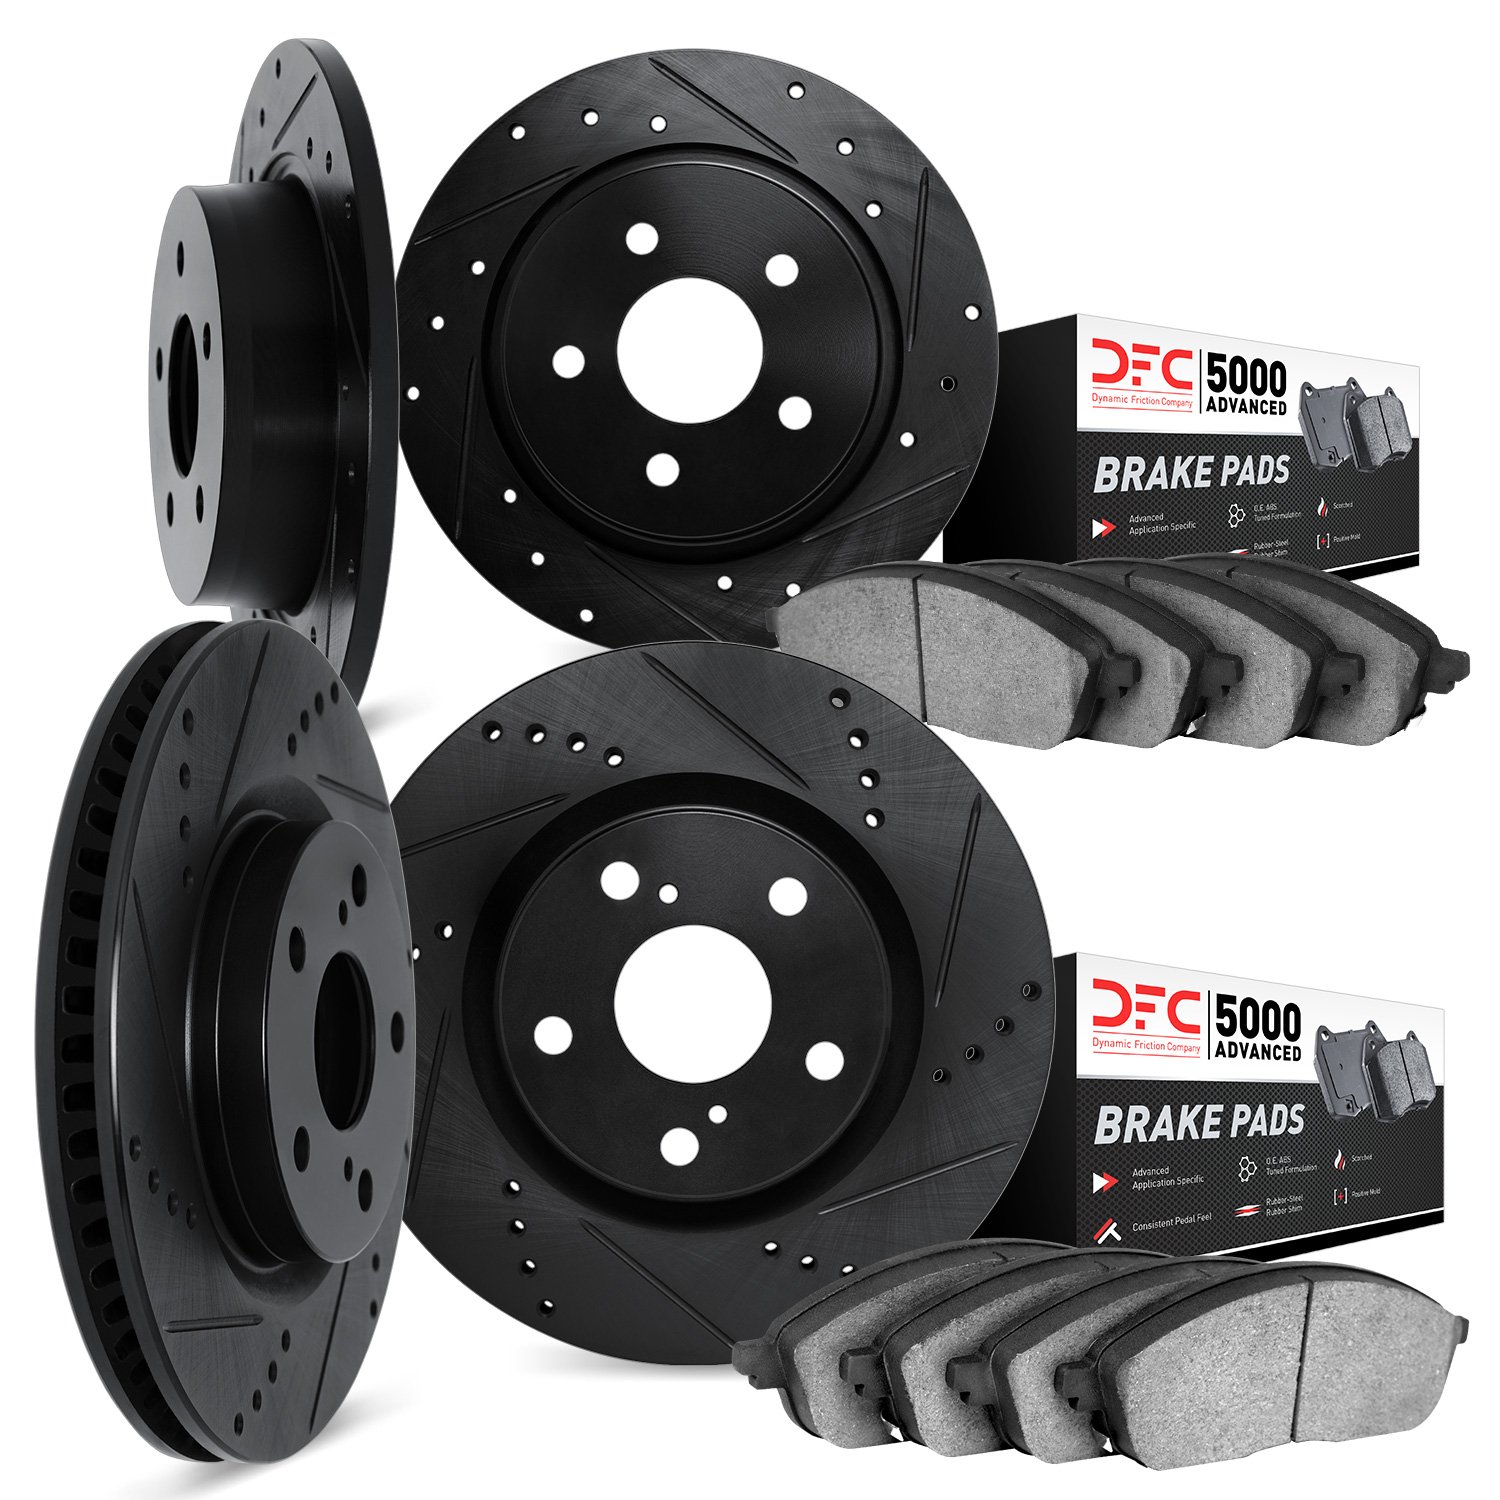 8504-54286 Drilled/Slotted Brake Rotors w/5000 Advanced Brake Pads Kit [Black], 2006-2013 Ford/Lincoln/Mercury/Mazda, Position: